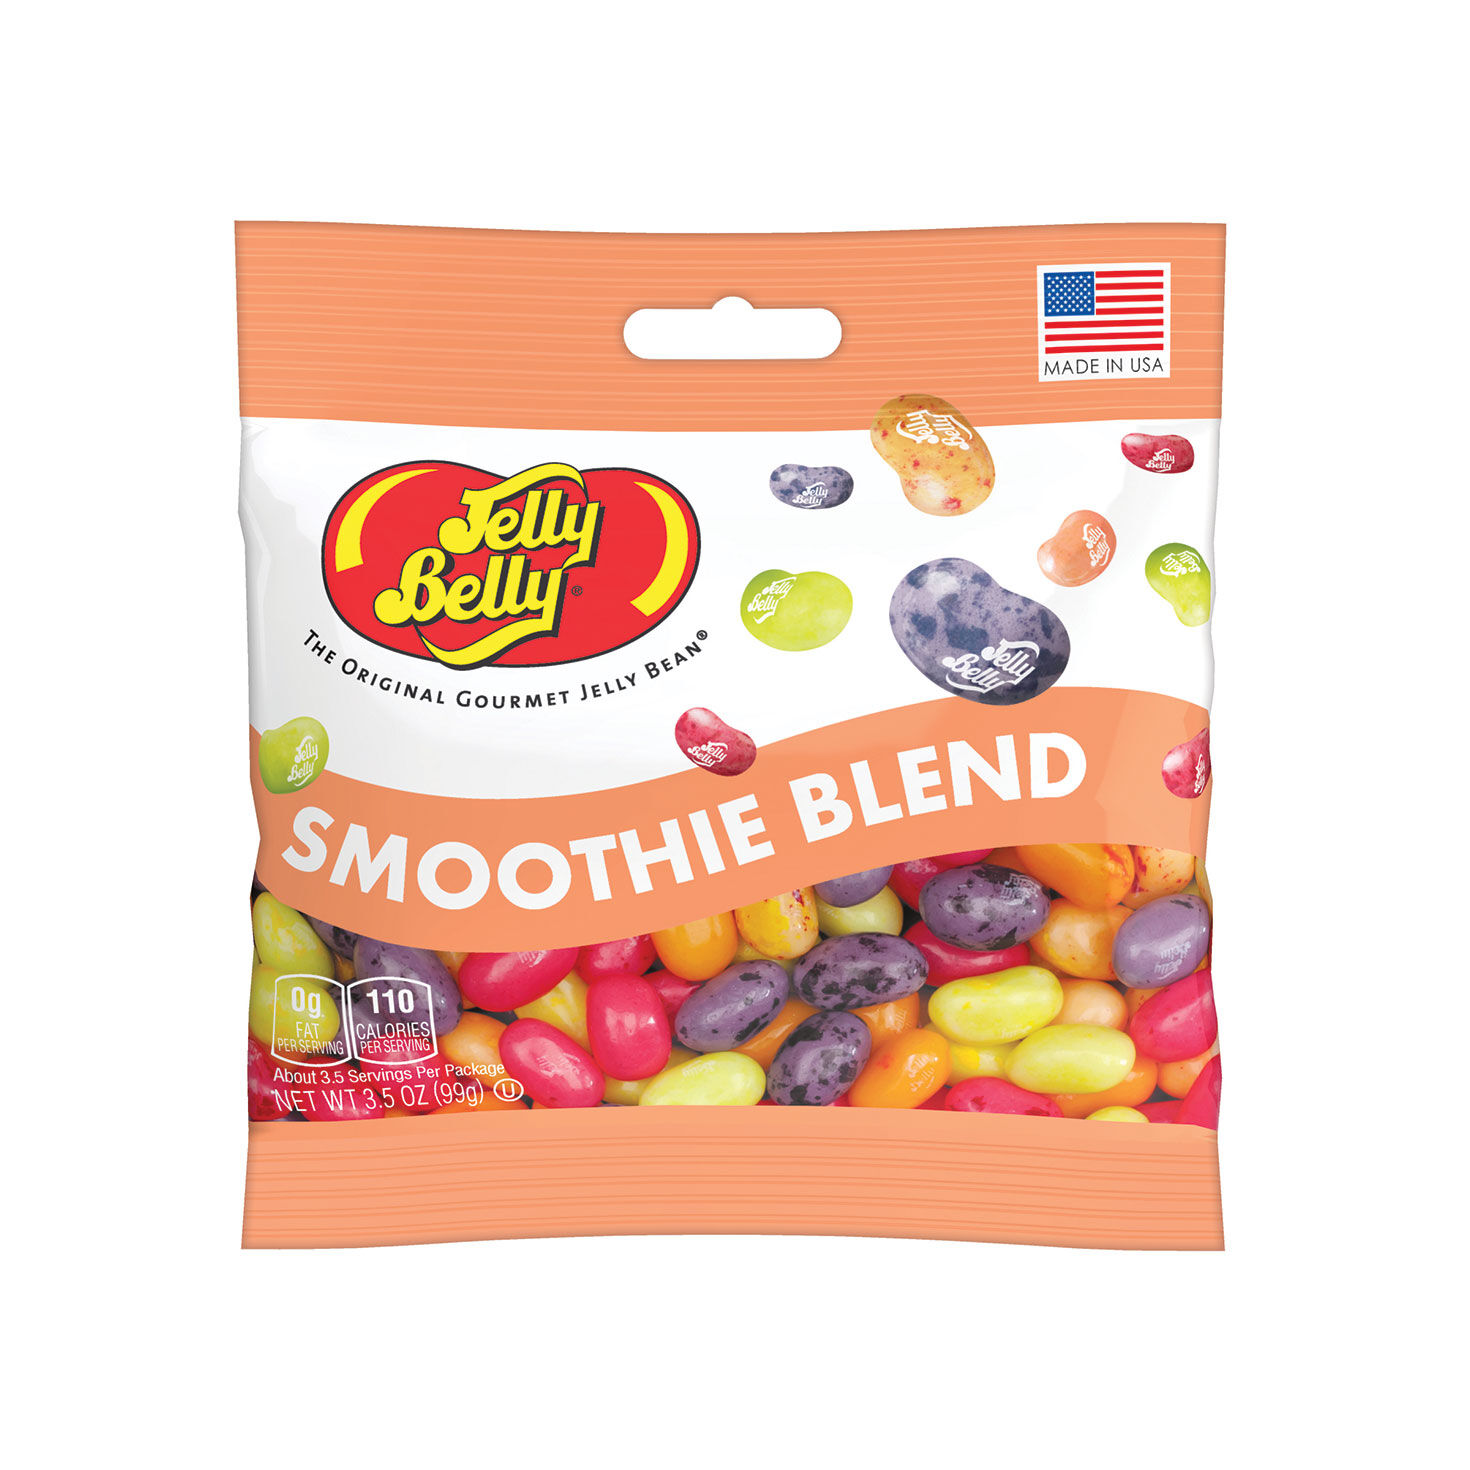 Kids Mix Jelly Beans 3.5 oz Grab & Go® Bag